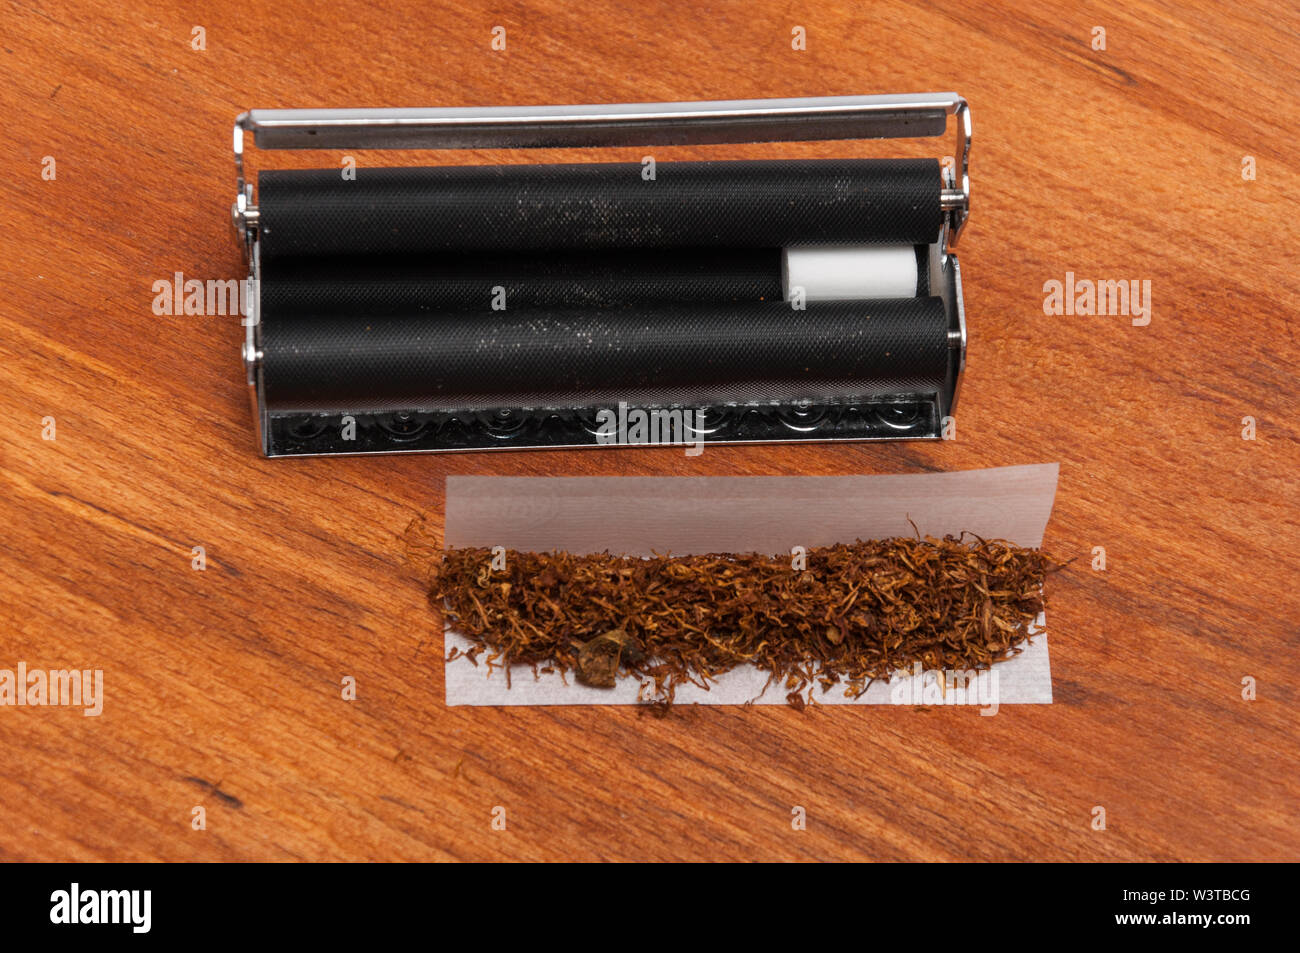 Tabaco para liar fotografías e imágenes de alta resolución - Alamy